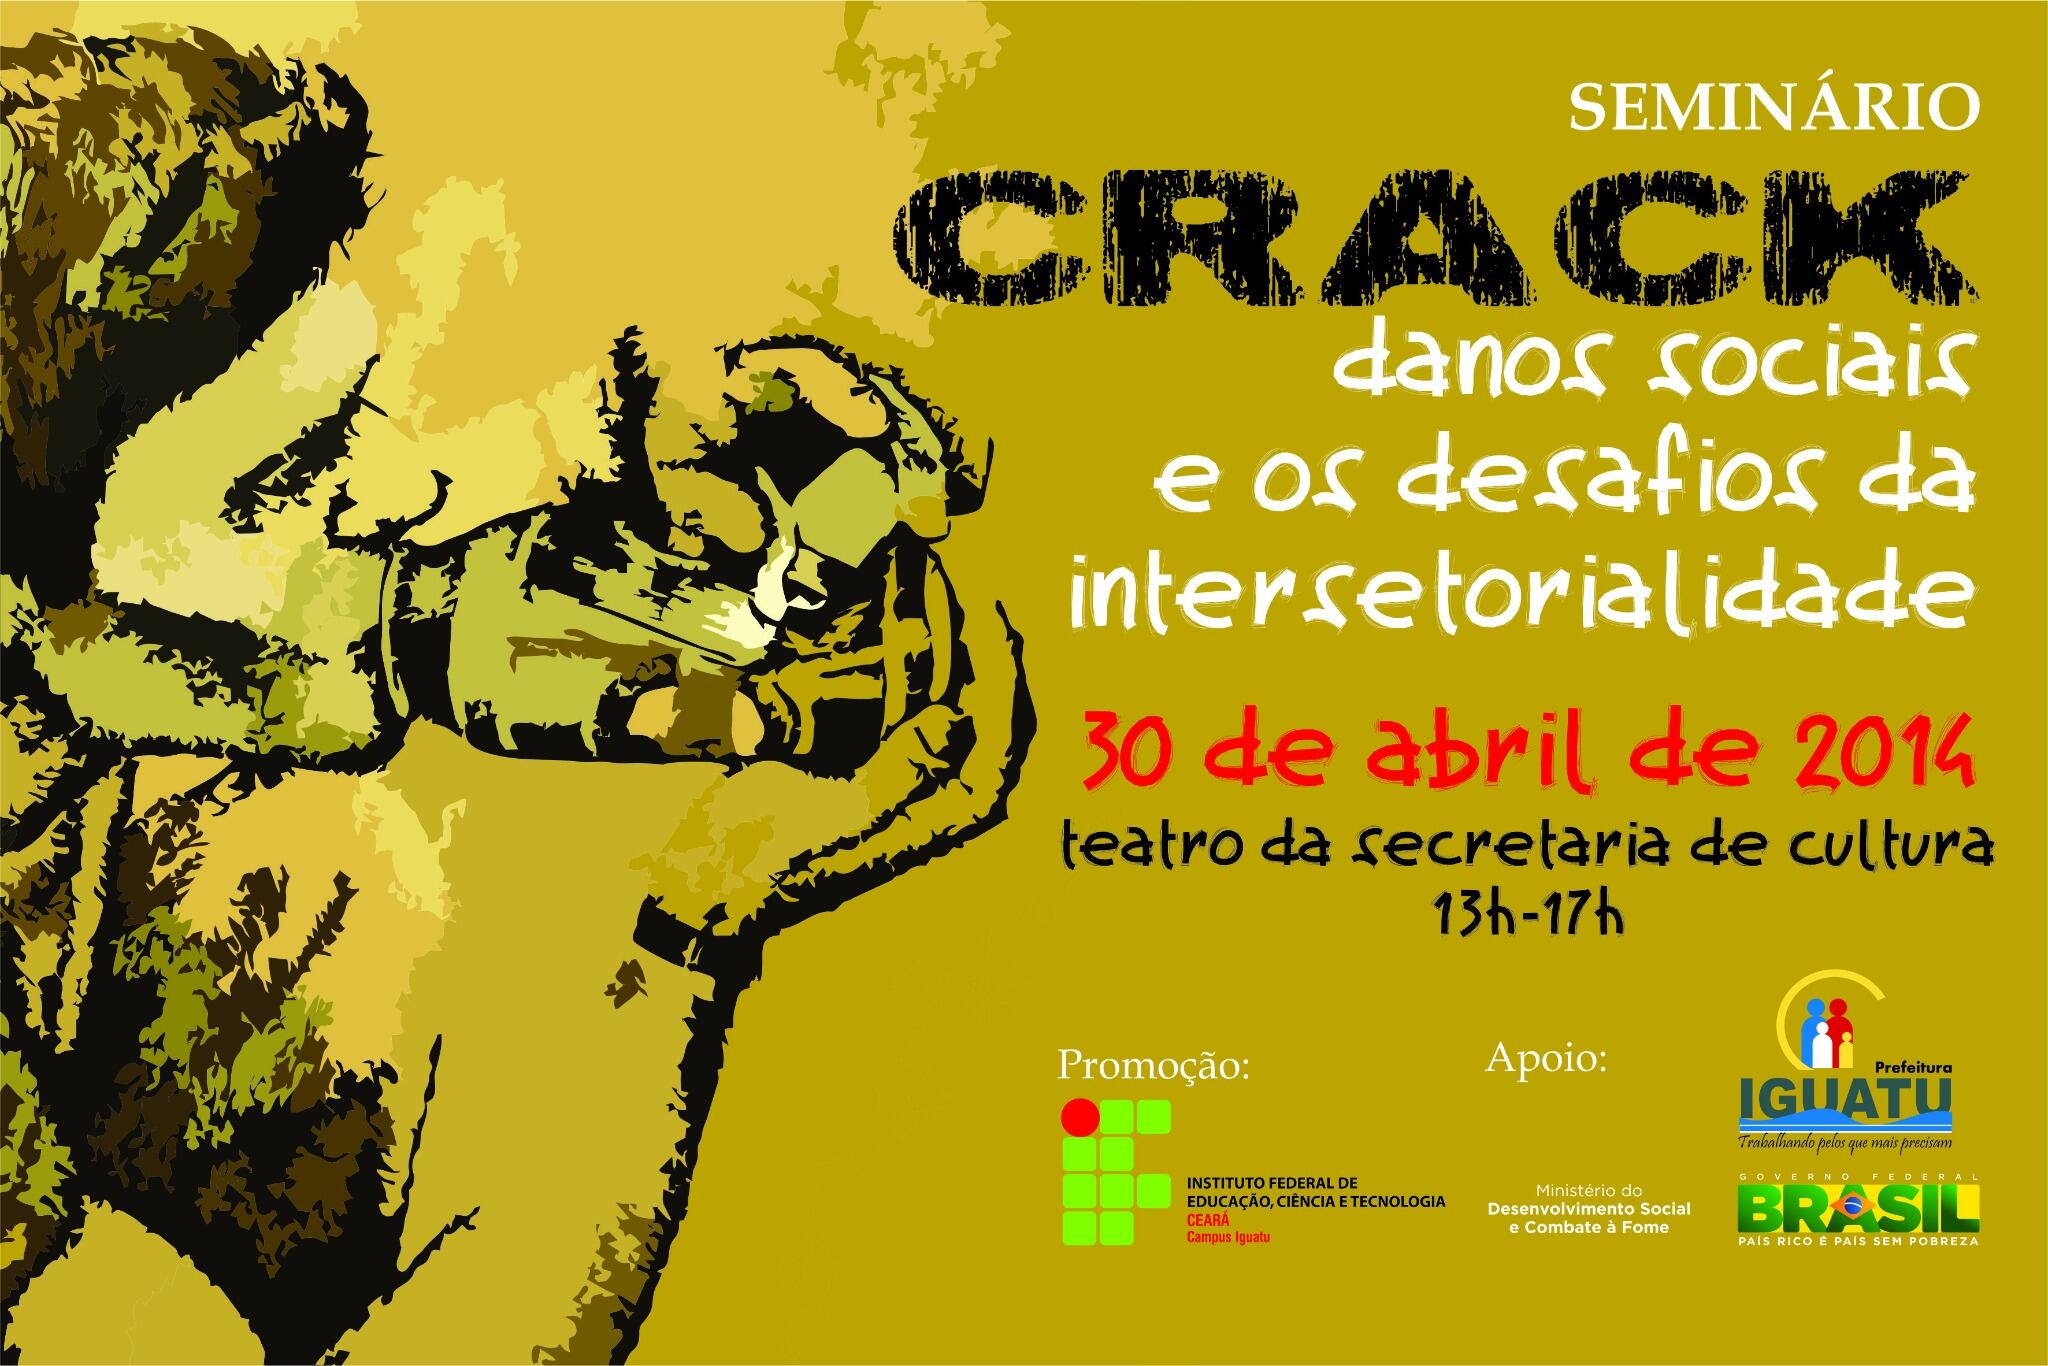 Cress Ceará 